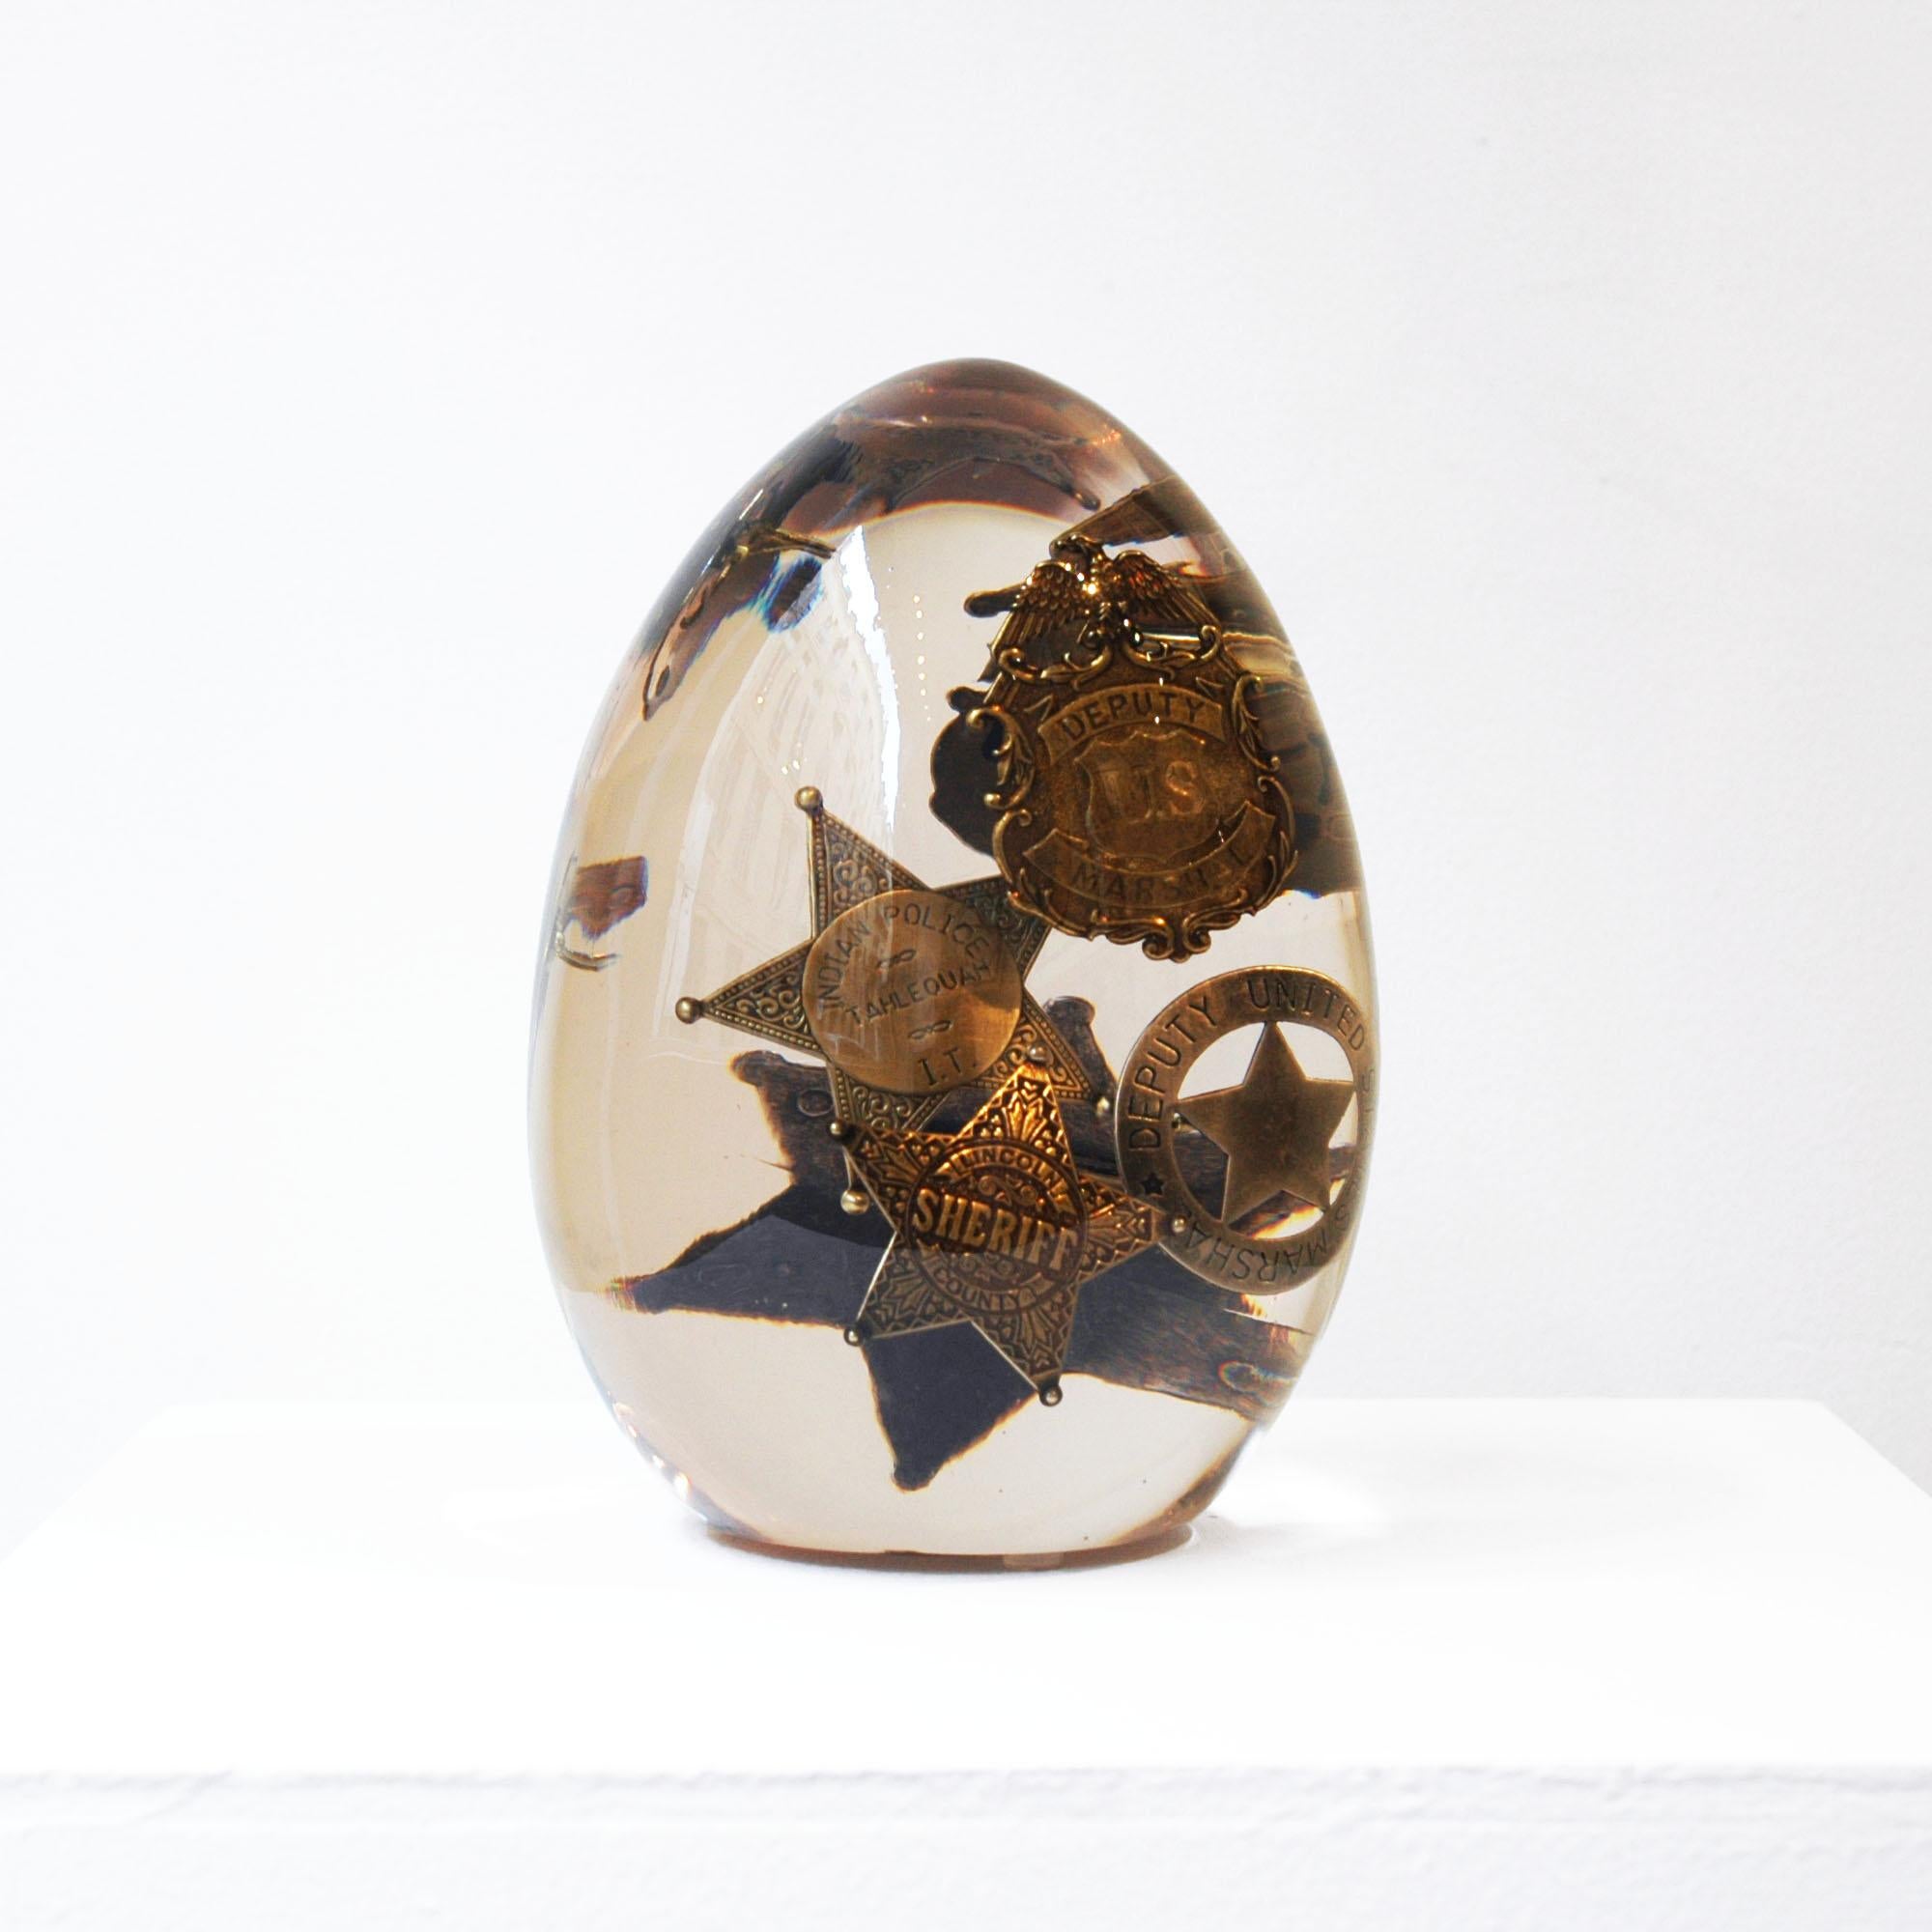 Woody Egg - Sculpture by Helder Batista